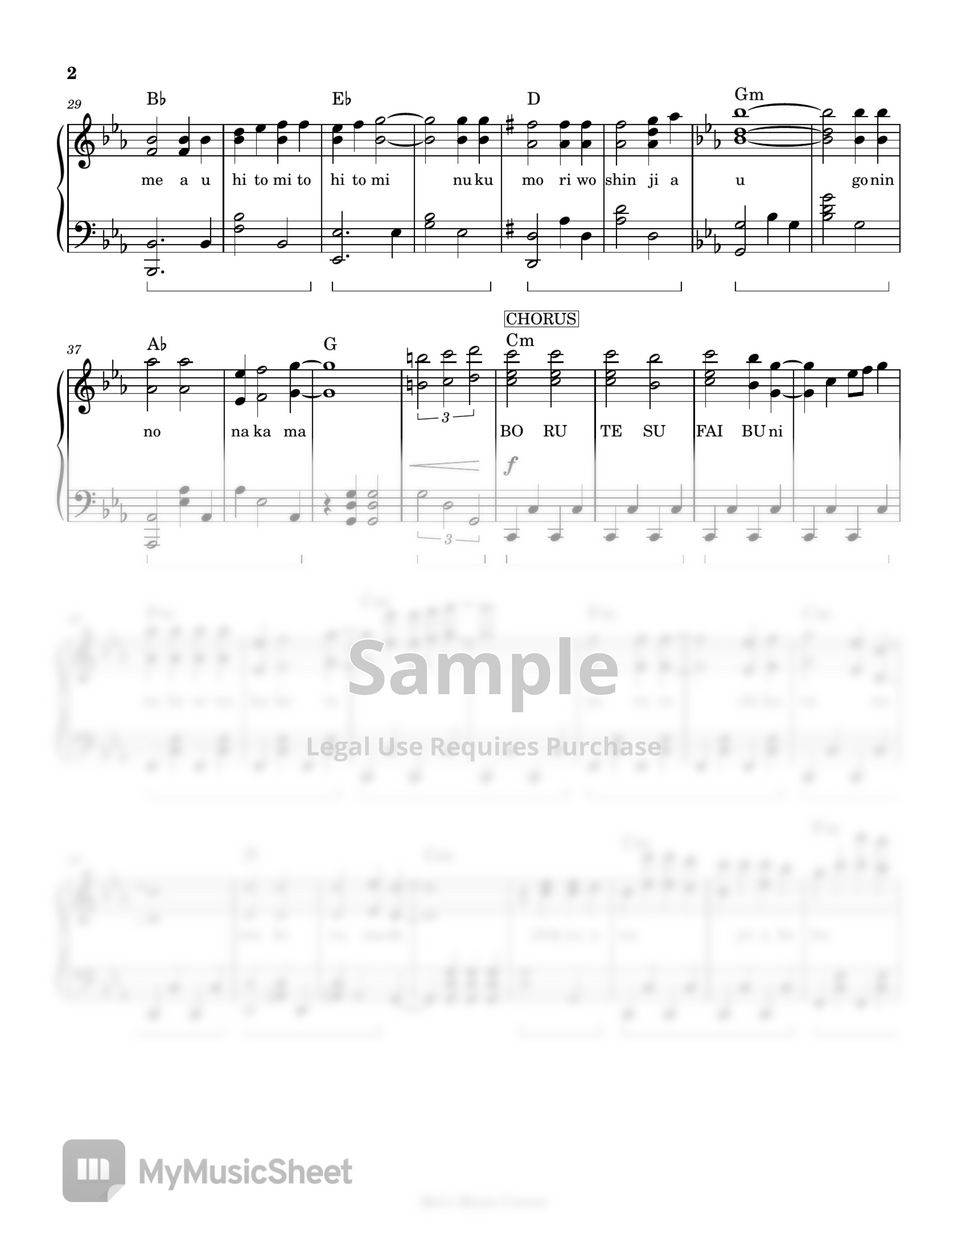 Julie Anne San Jose - Voltes V: Legacy OST (piano sheet music) by Mel's Music Corner